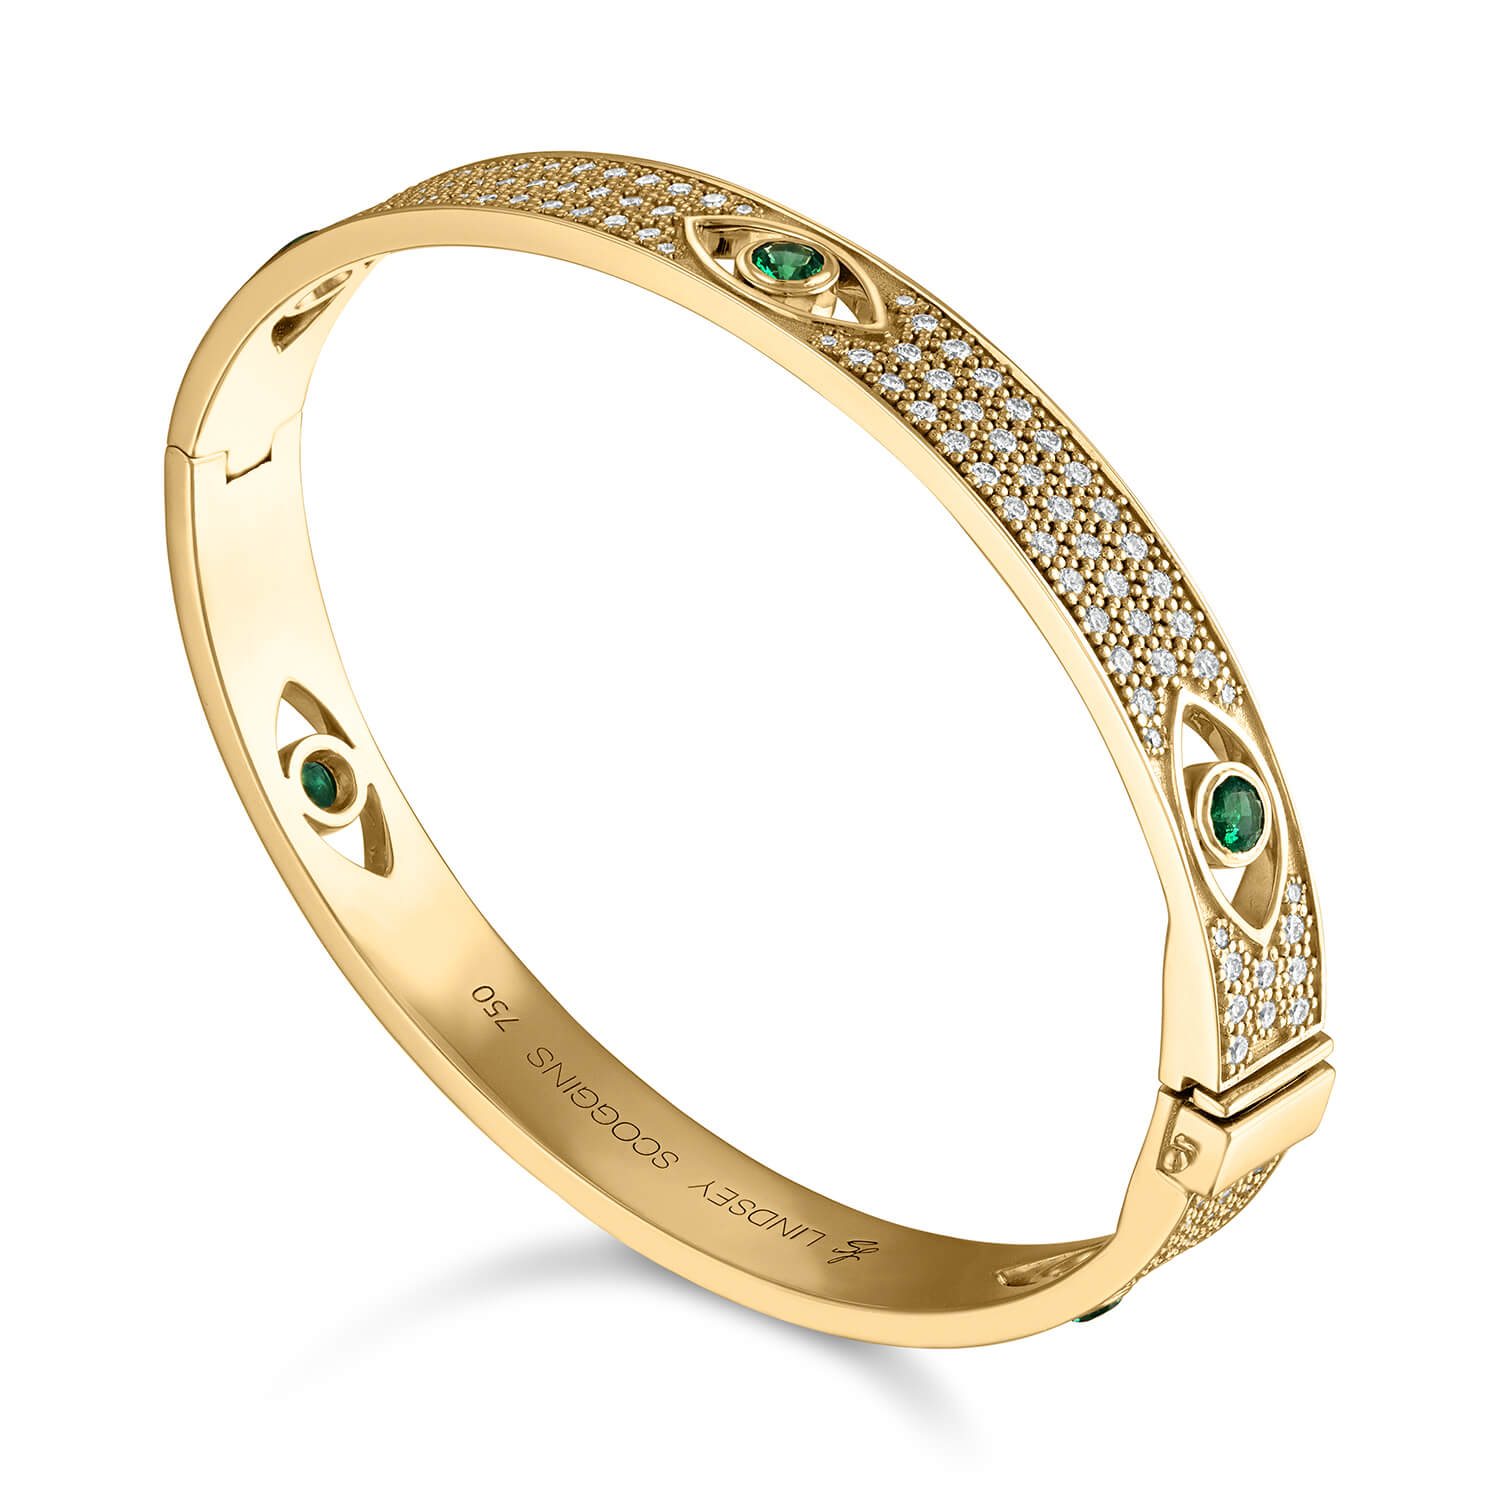 Evil eye diamond and emerald bangle